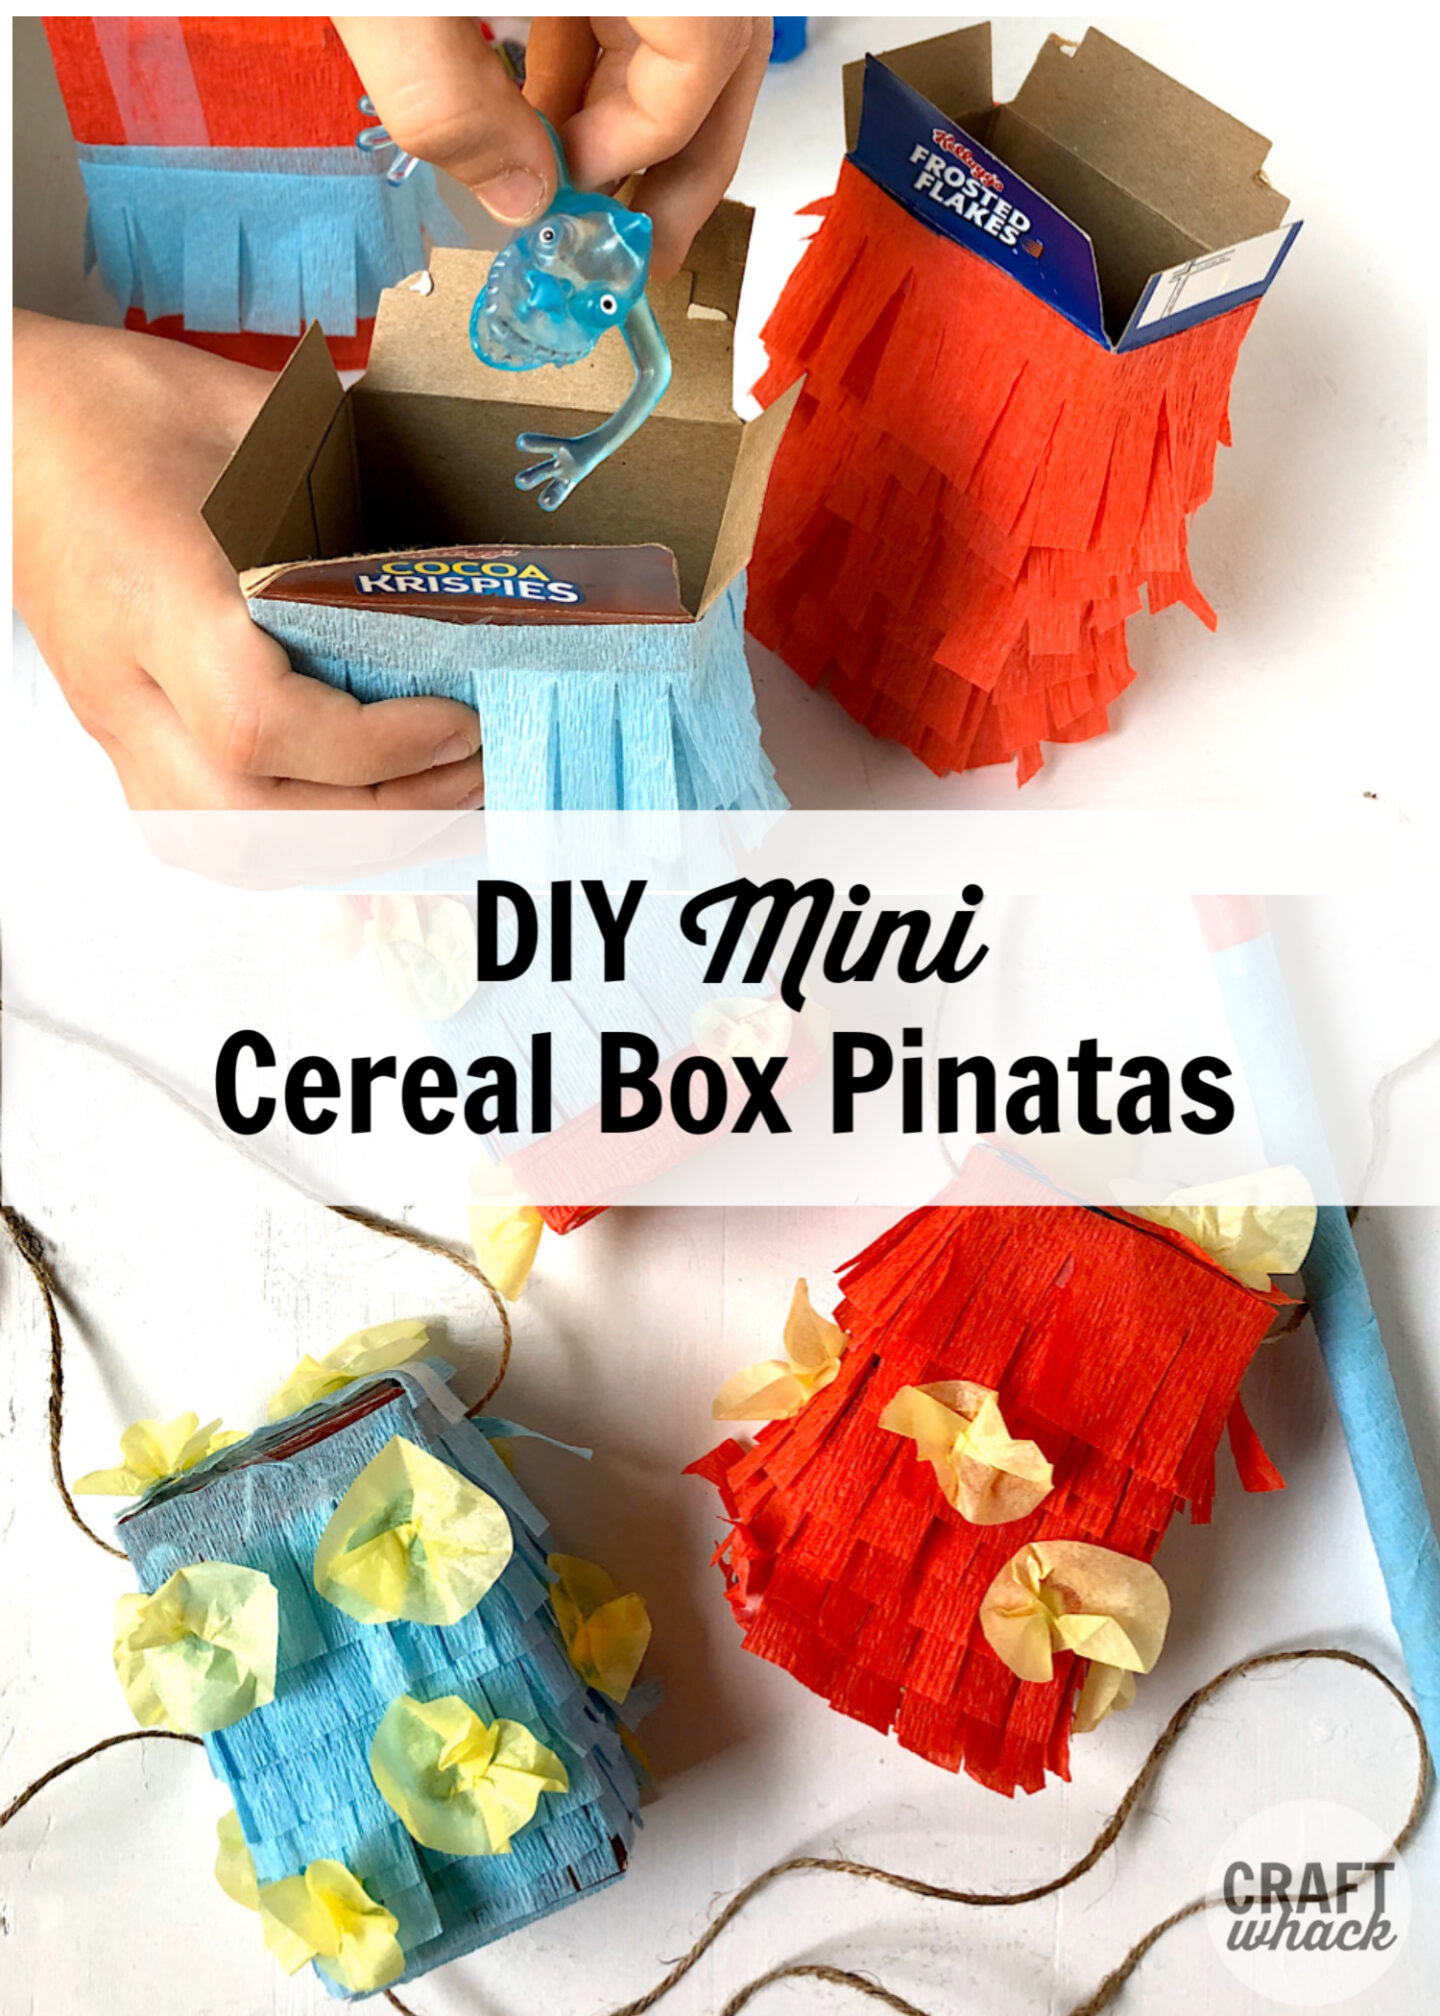 Cereal box pinatas with text overlay that says DIY mini cereal box pinatas